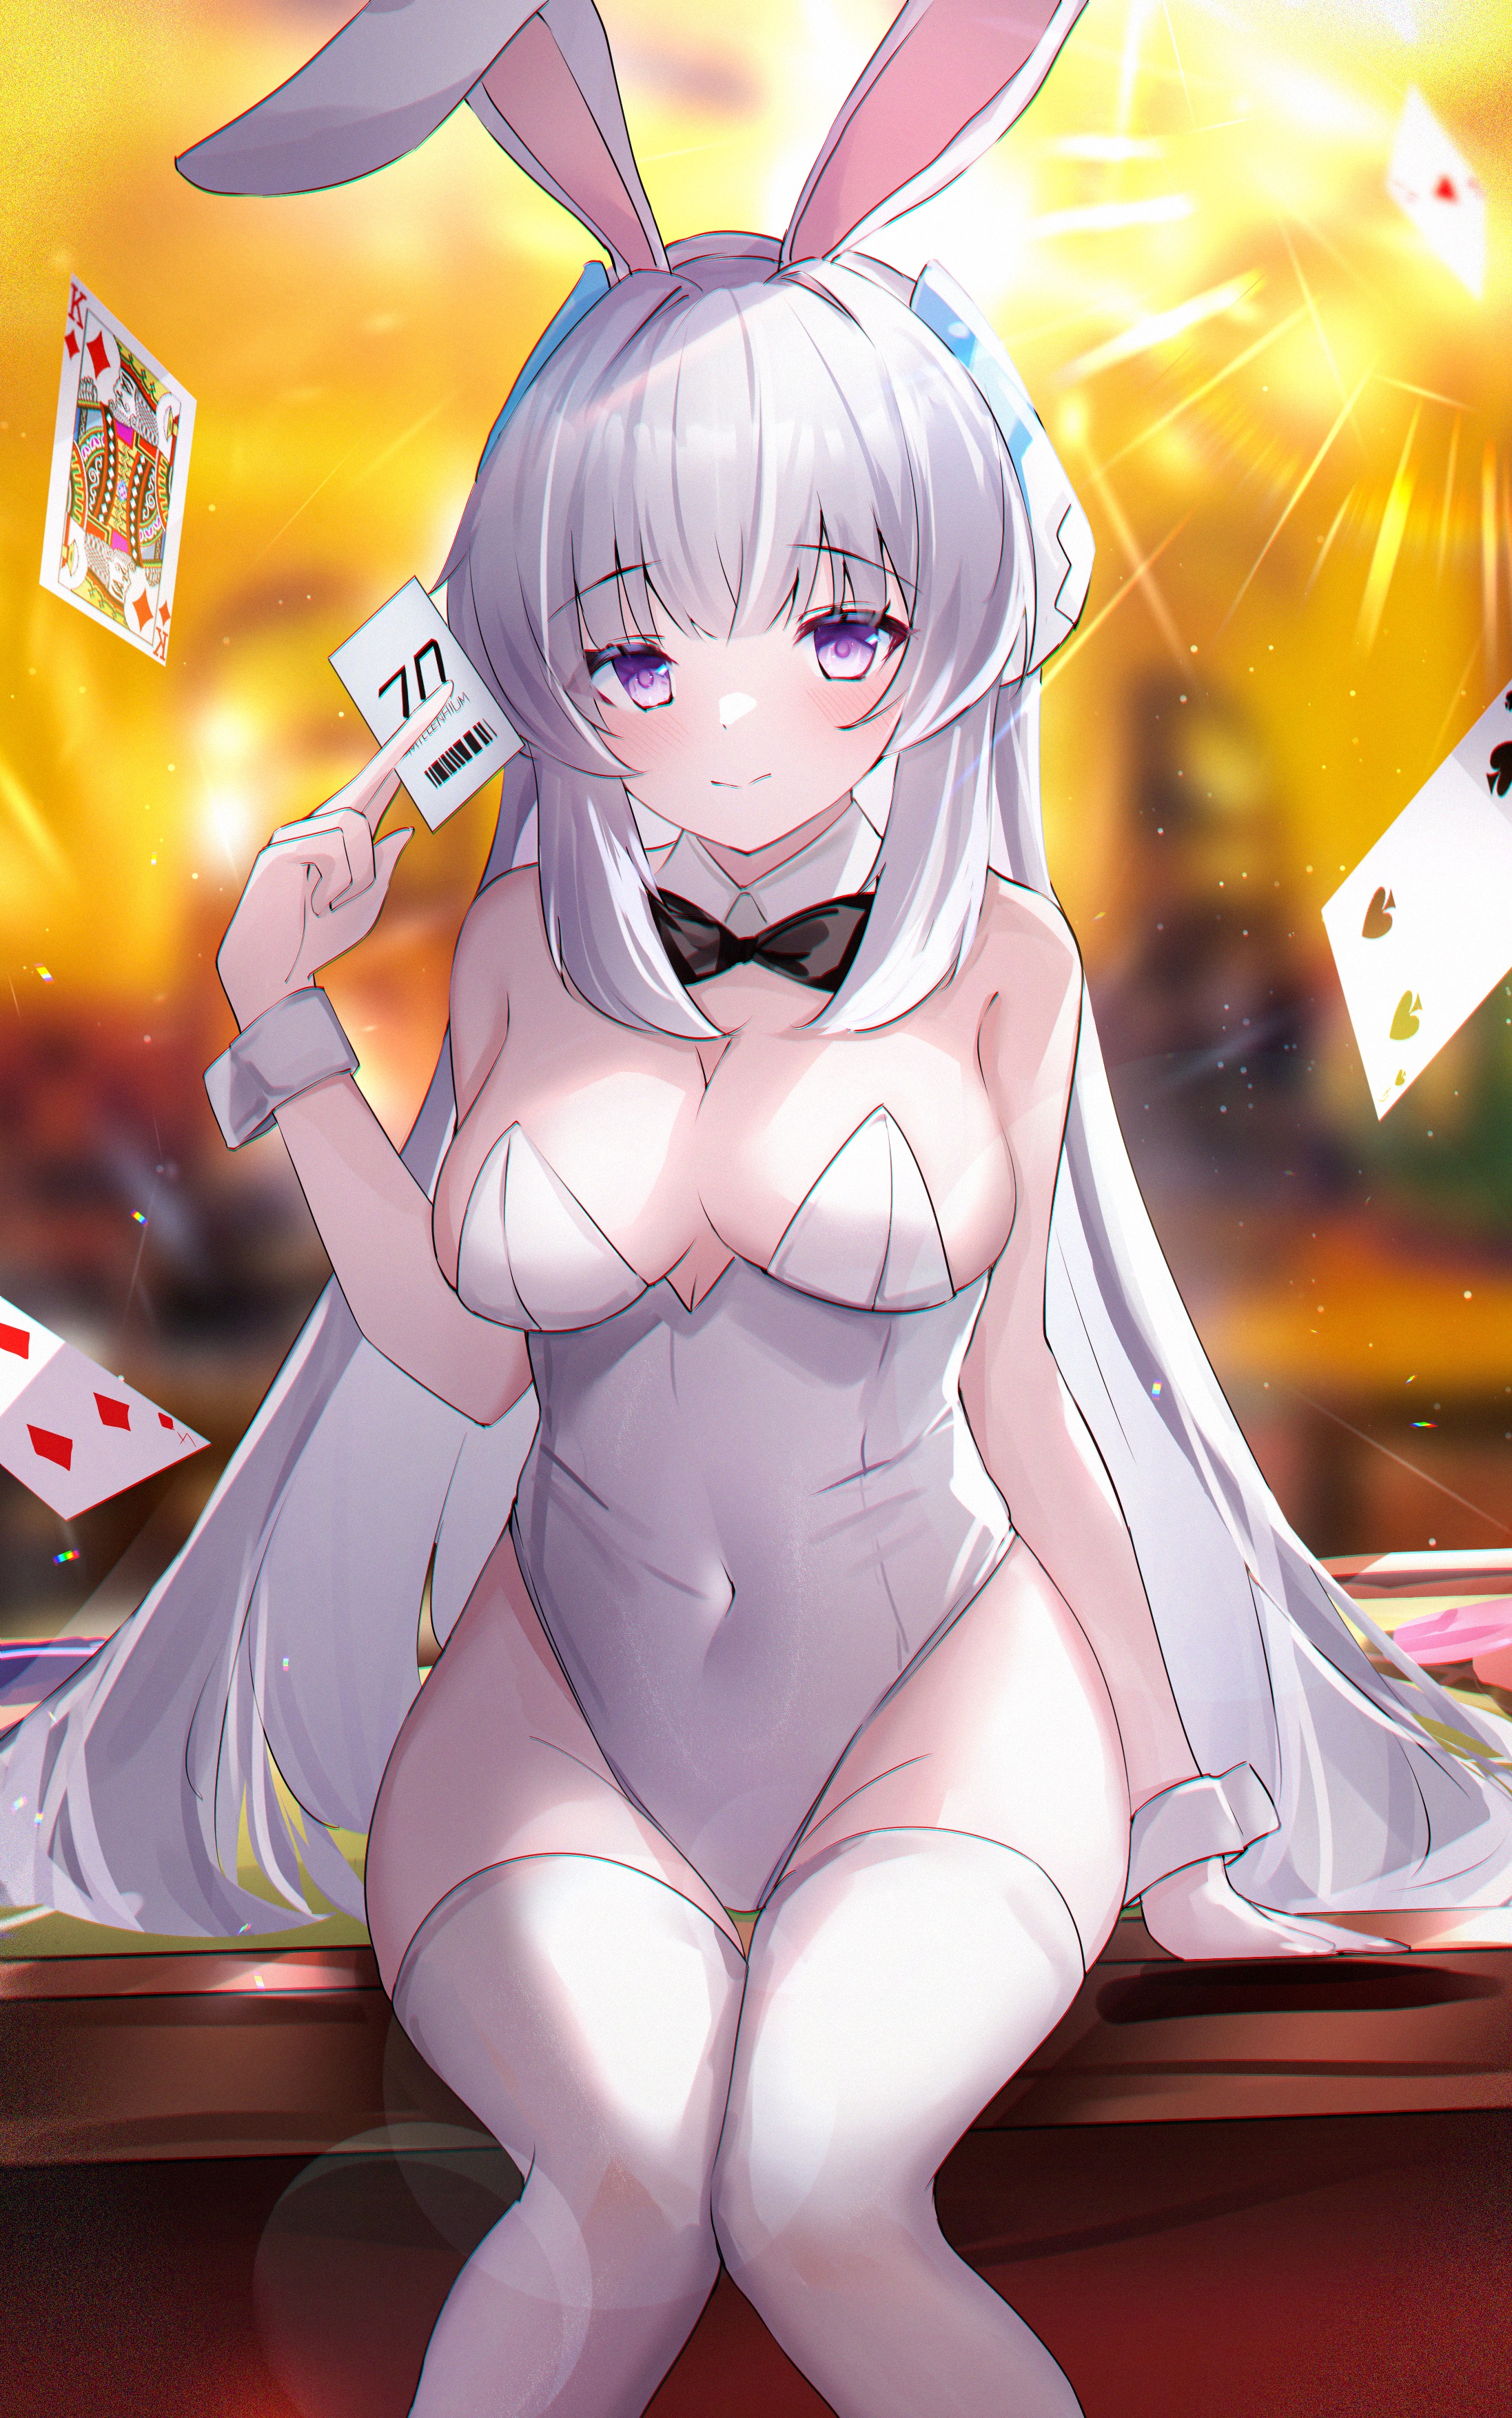 Anime 2194x3508 anime anime girls bunny suit bunny ears stockings cleavage cards purple eyes bow tie big boobs casino